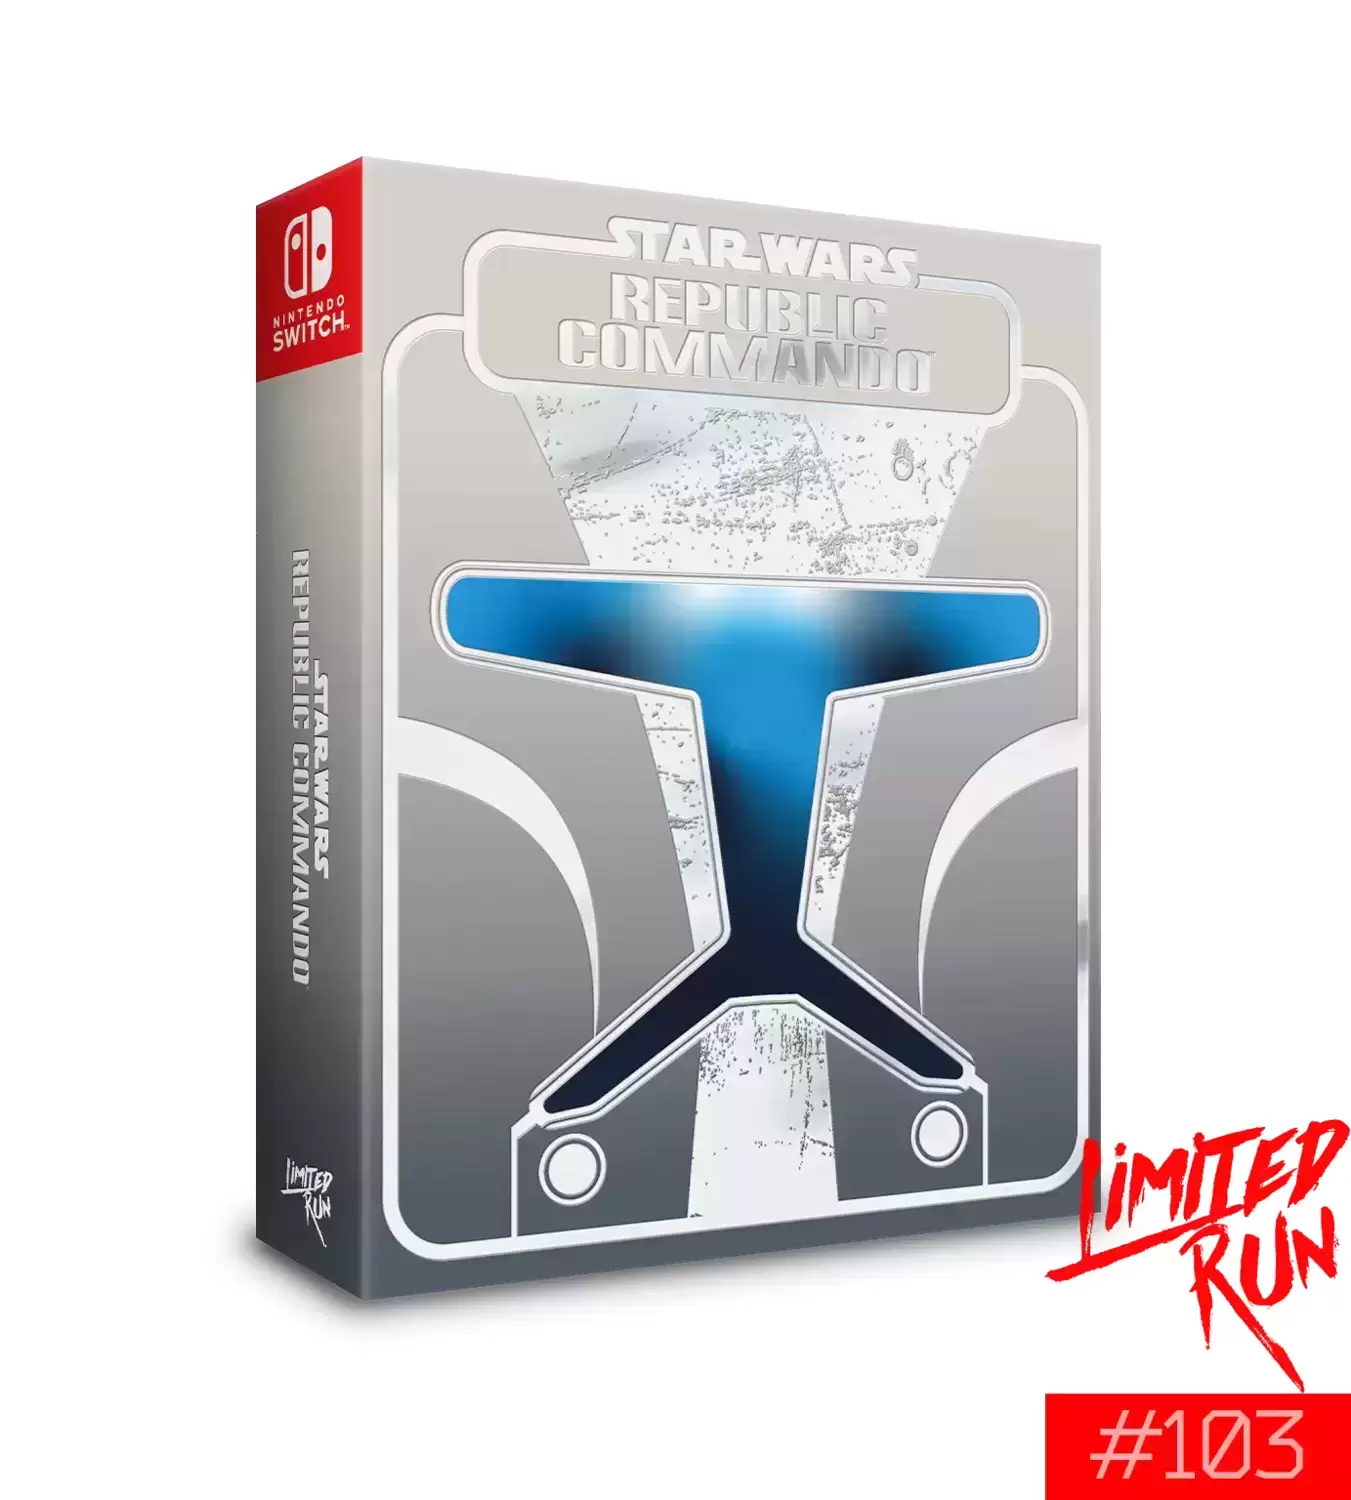 Nintendo Switch Games - Star Wars: Republic Commando Collector’s Edition - Limited Run Games #103